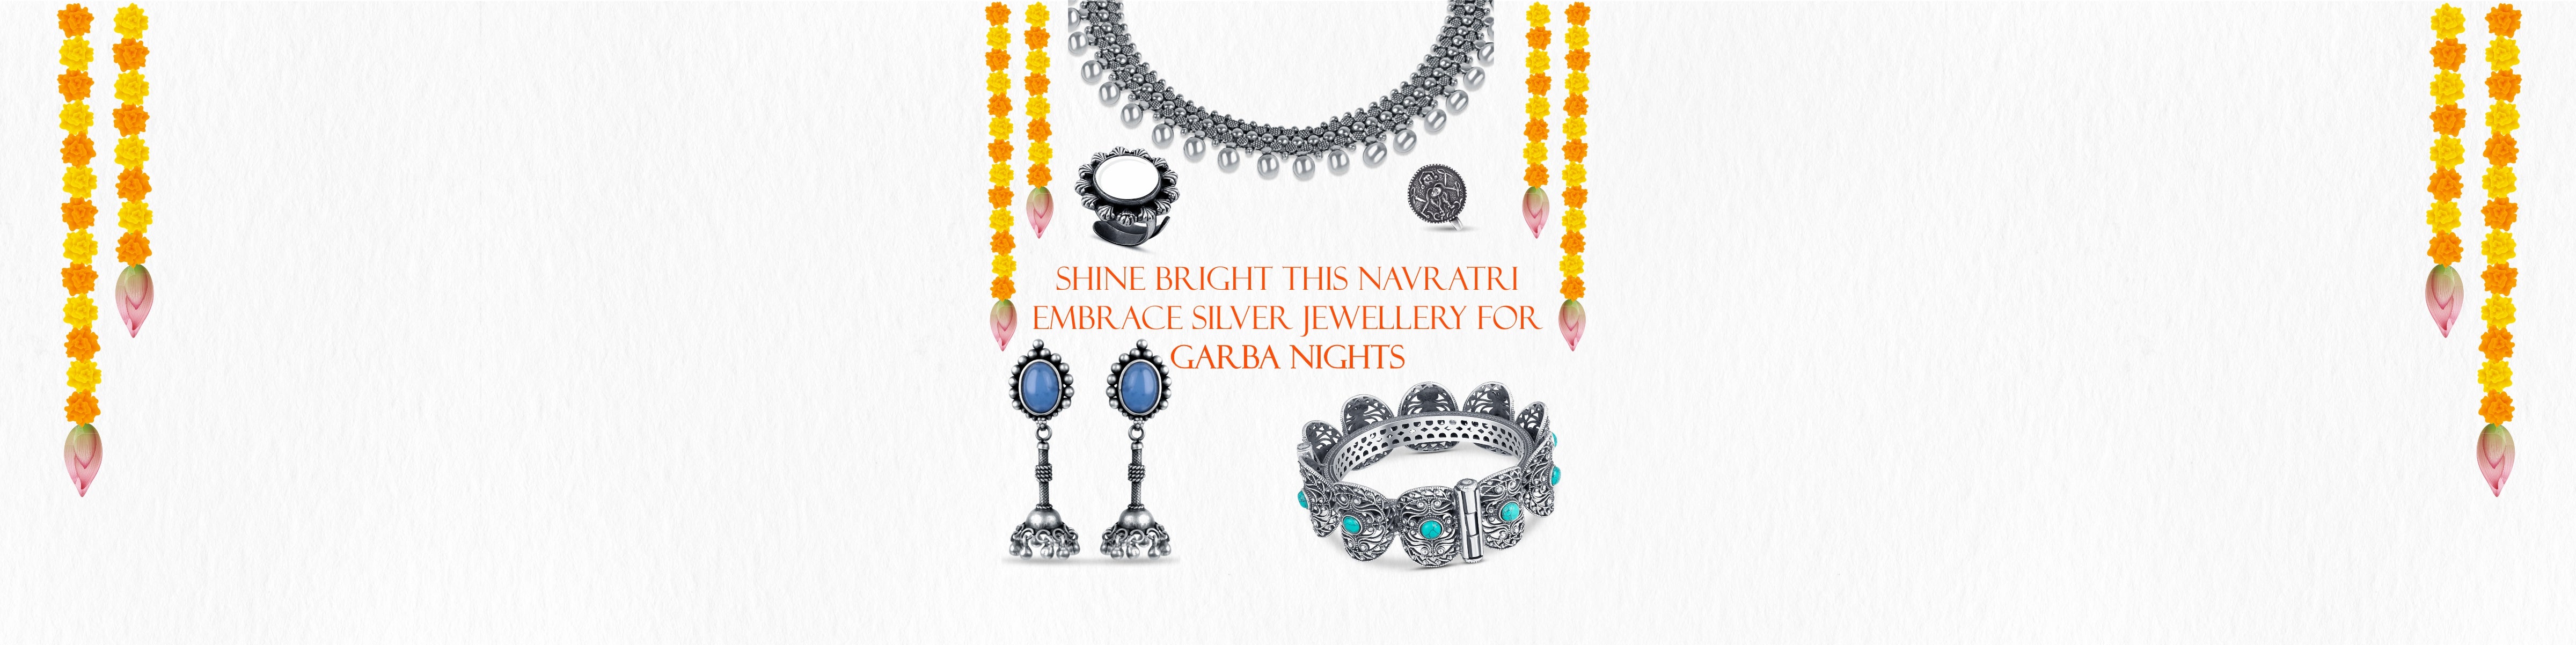 Shine Bright This Navratri: Embrace Silver Jewellery for Garba Nights